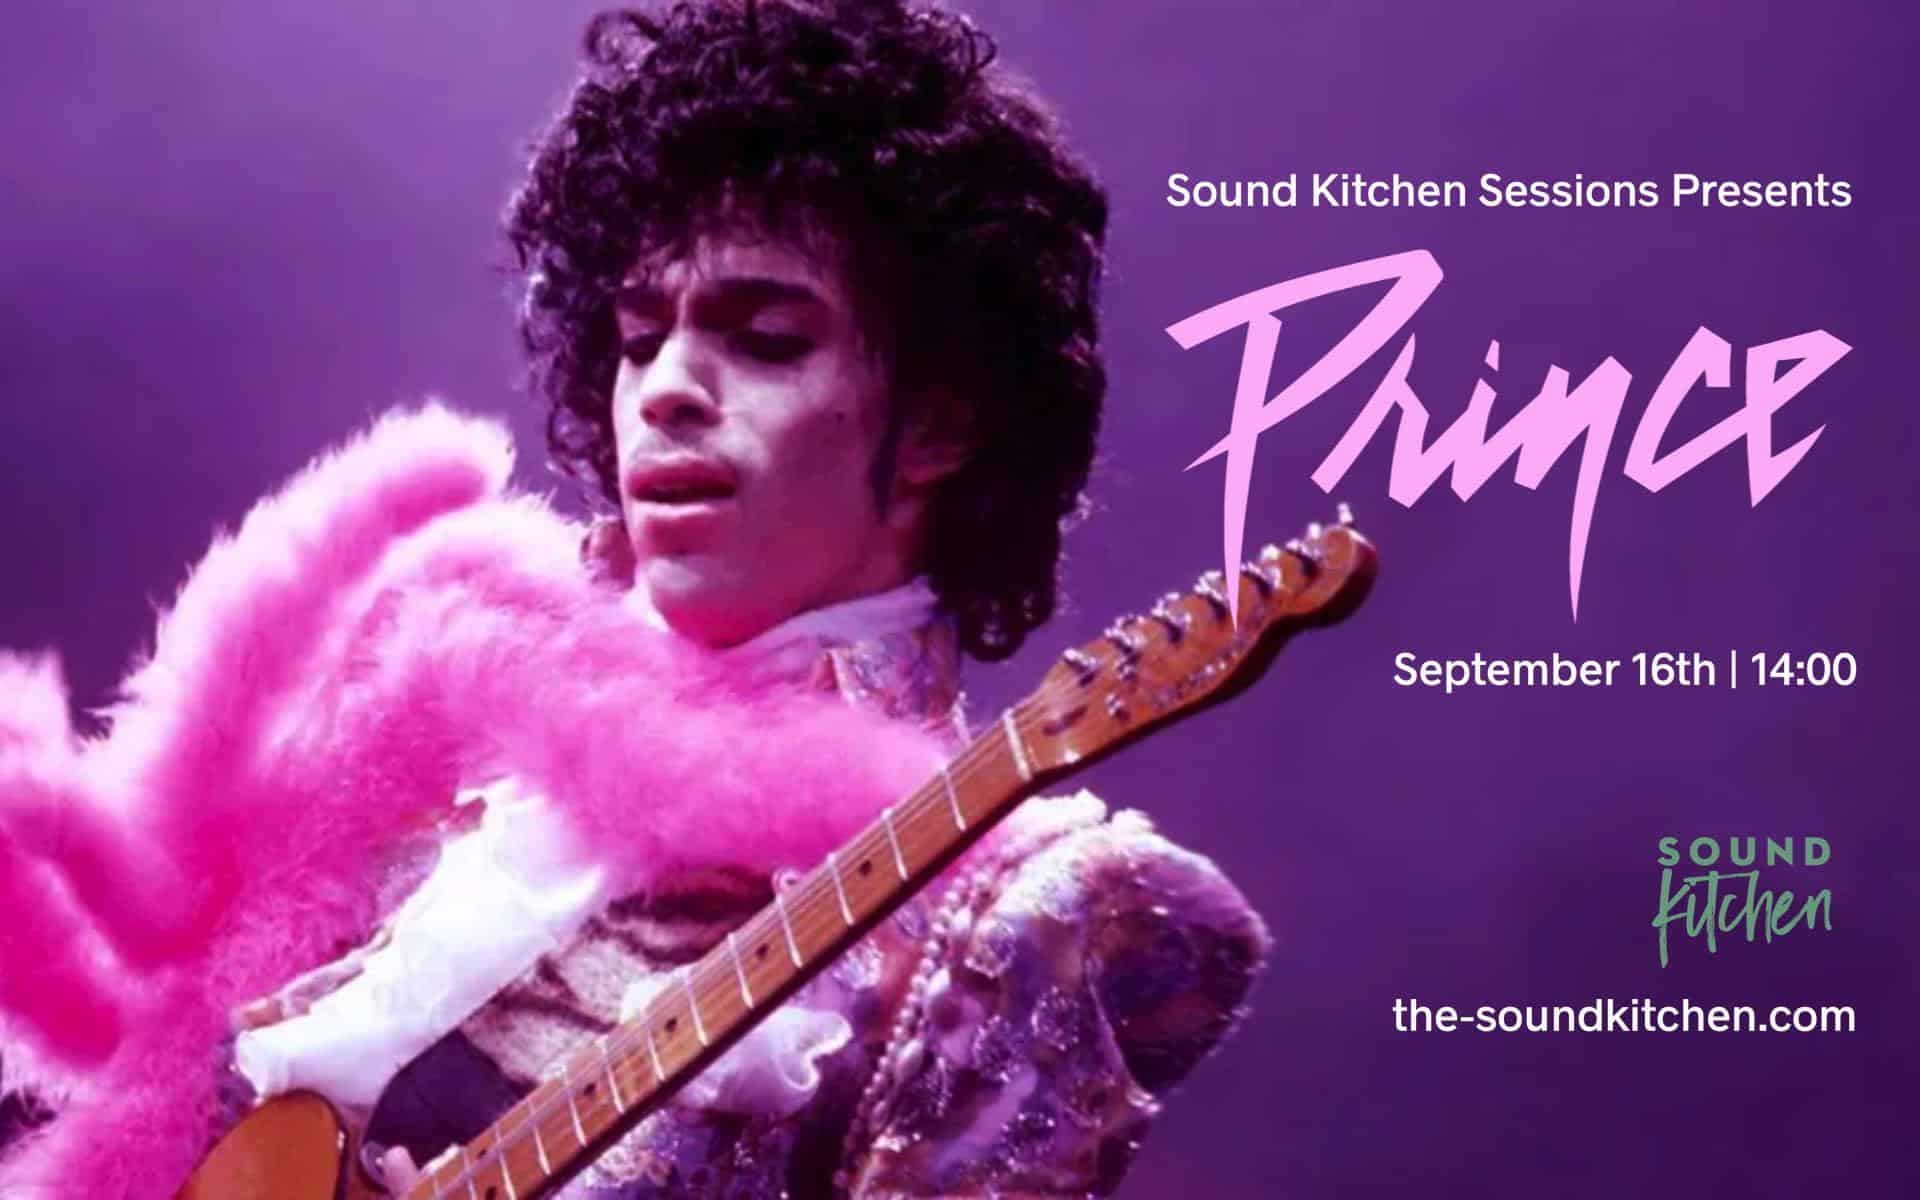 Sound Kitchen Sessions Presents Prince